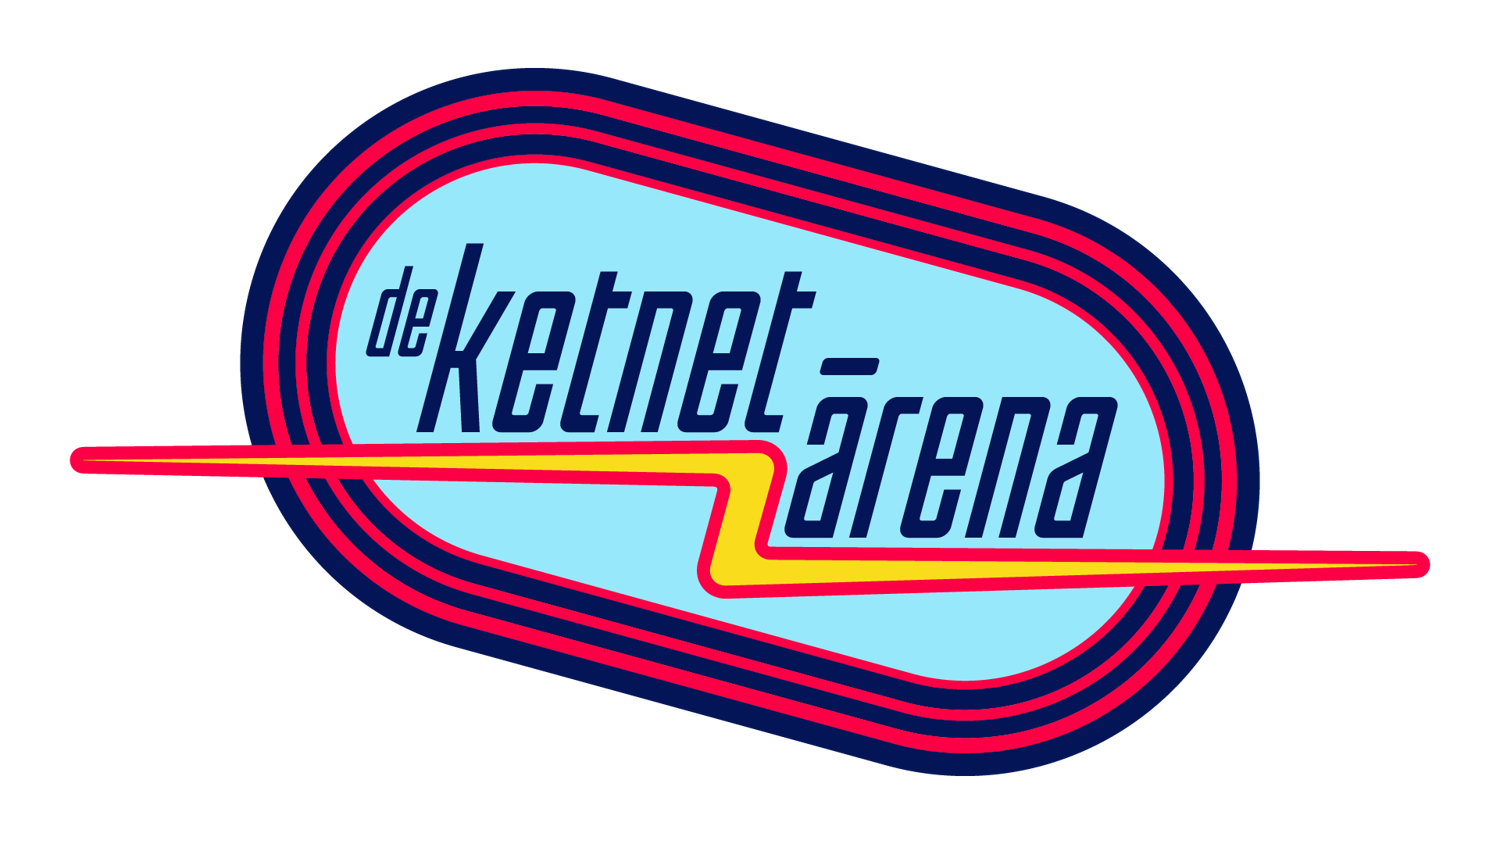 Logo De Ketnet-Arena